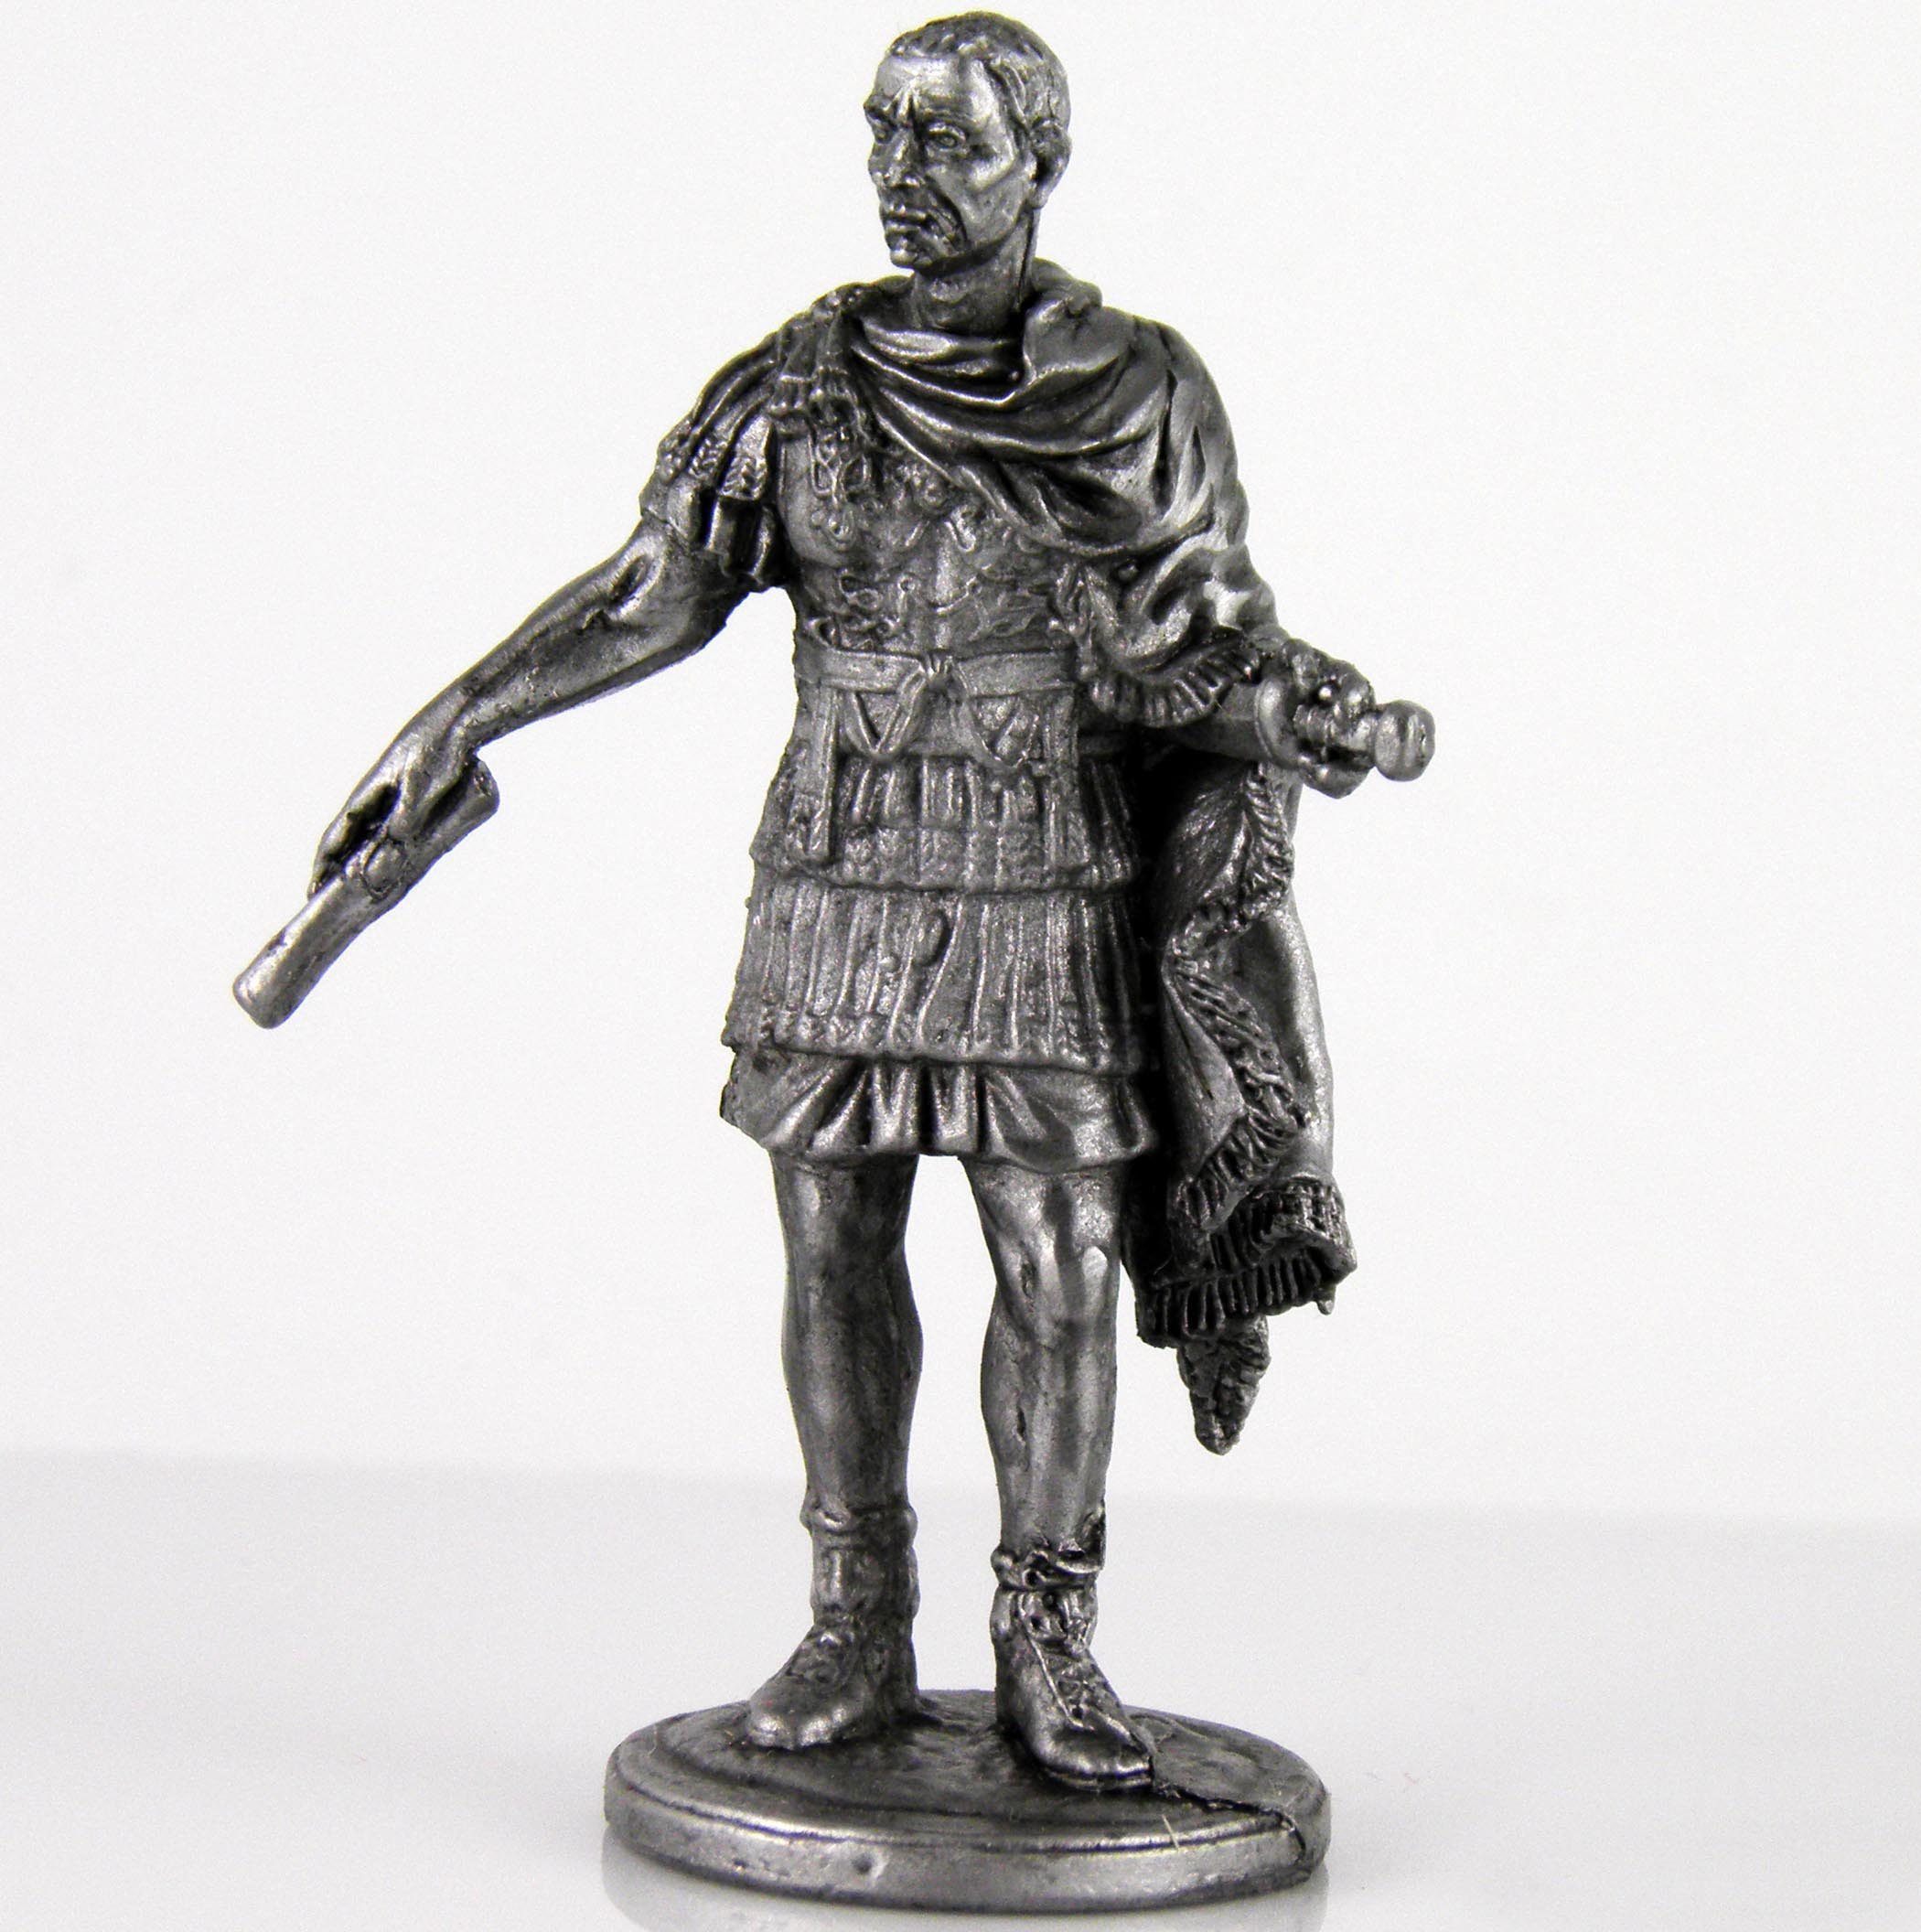 Tin Soldiers Julius Caesar - PC Review and Full Download